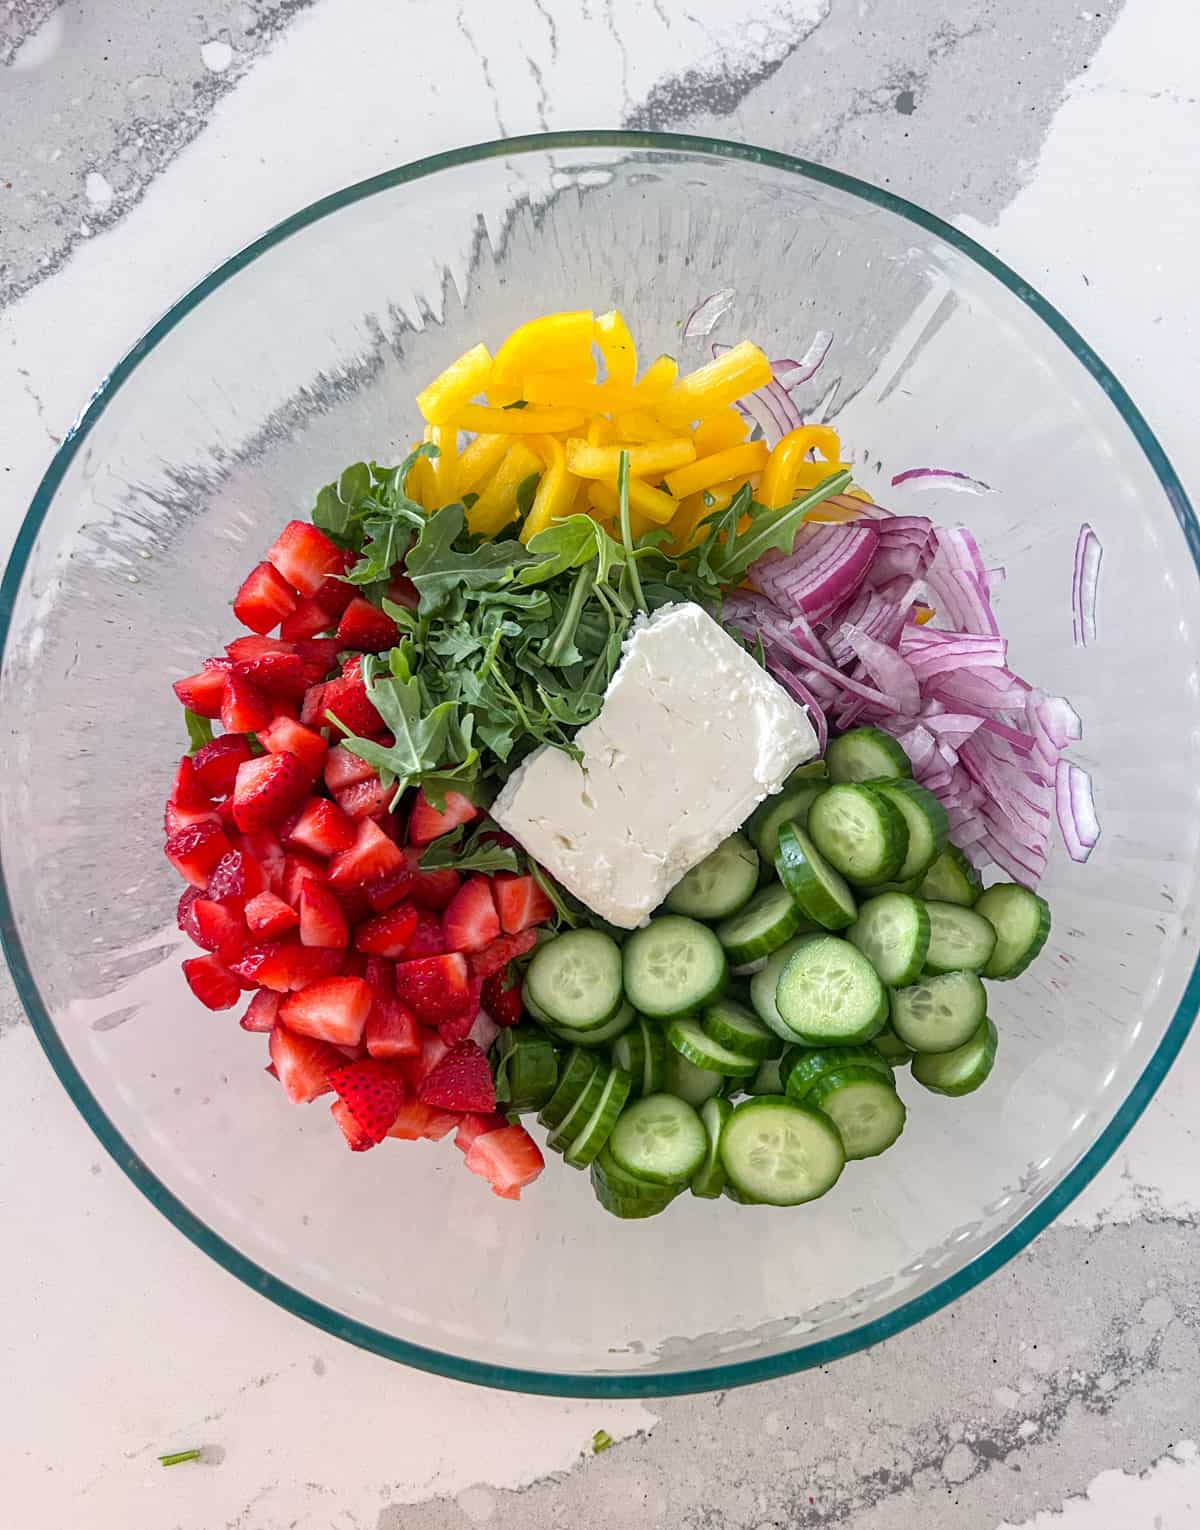 Arugula salad ingredients in a bowl.